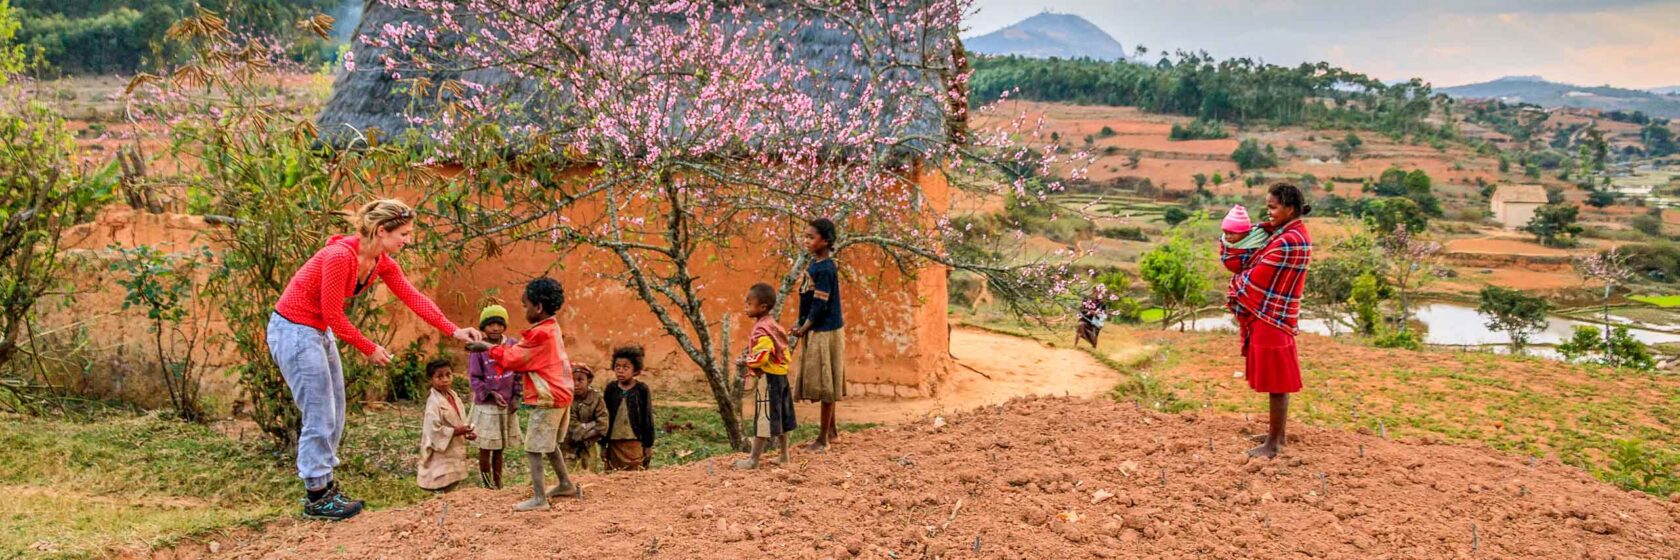 Tourist meets local children near flowering tree in Madagascar.